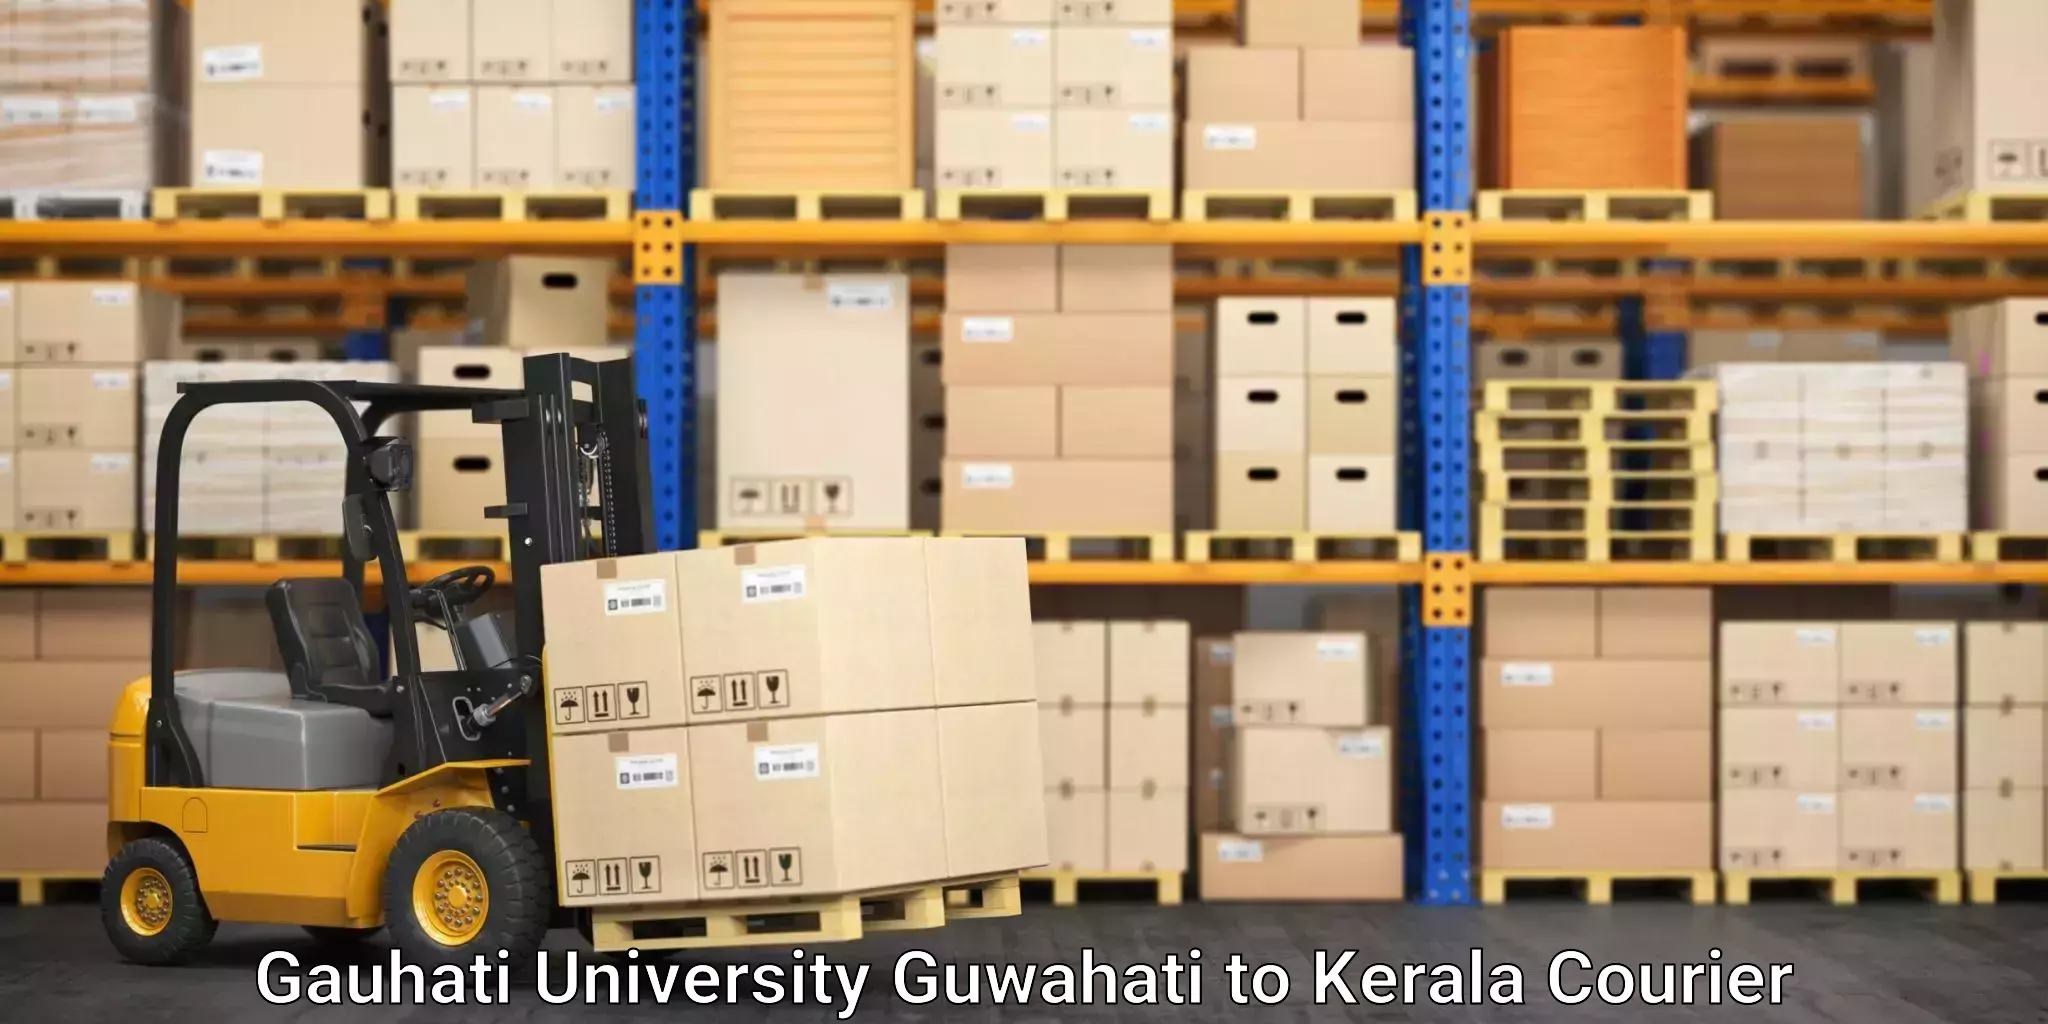 Speedy delivery service Gauhati University Guwahati to Kerala